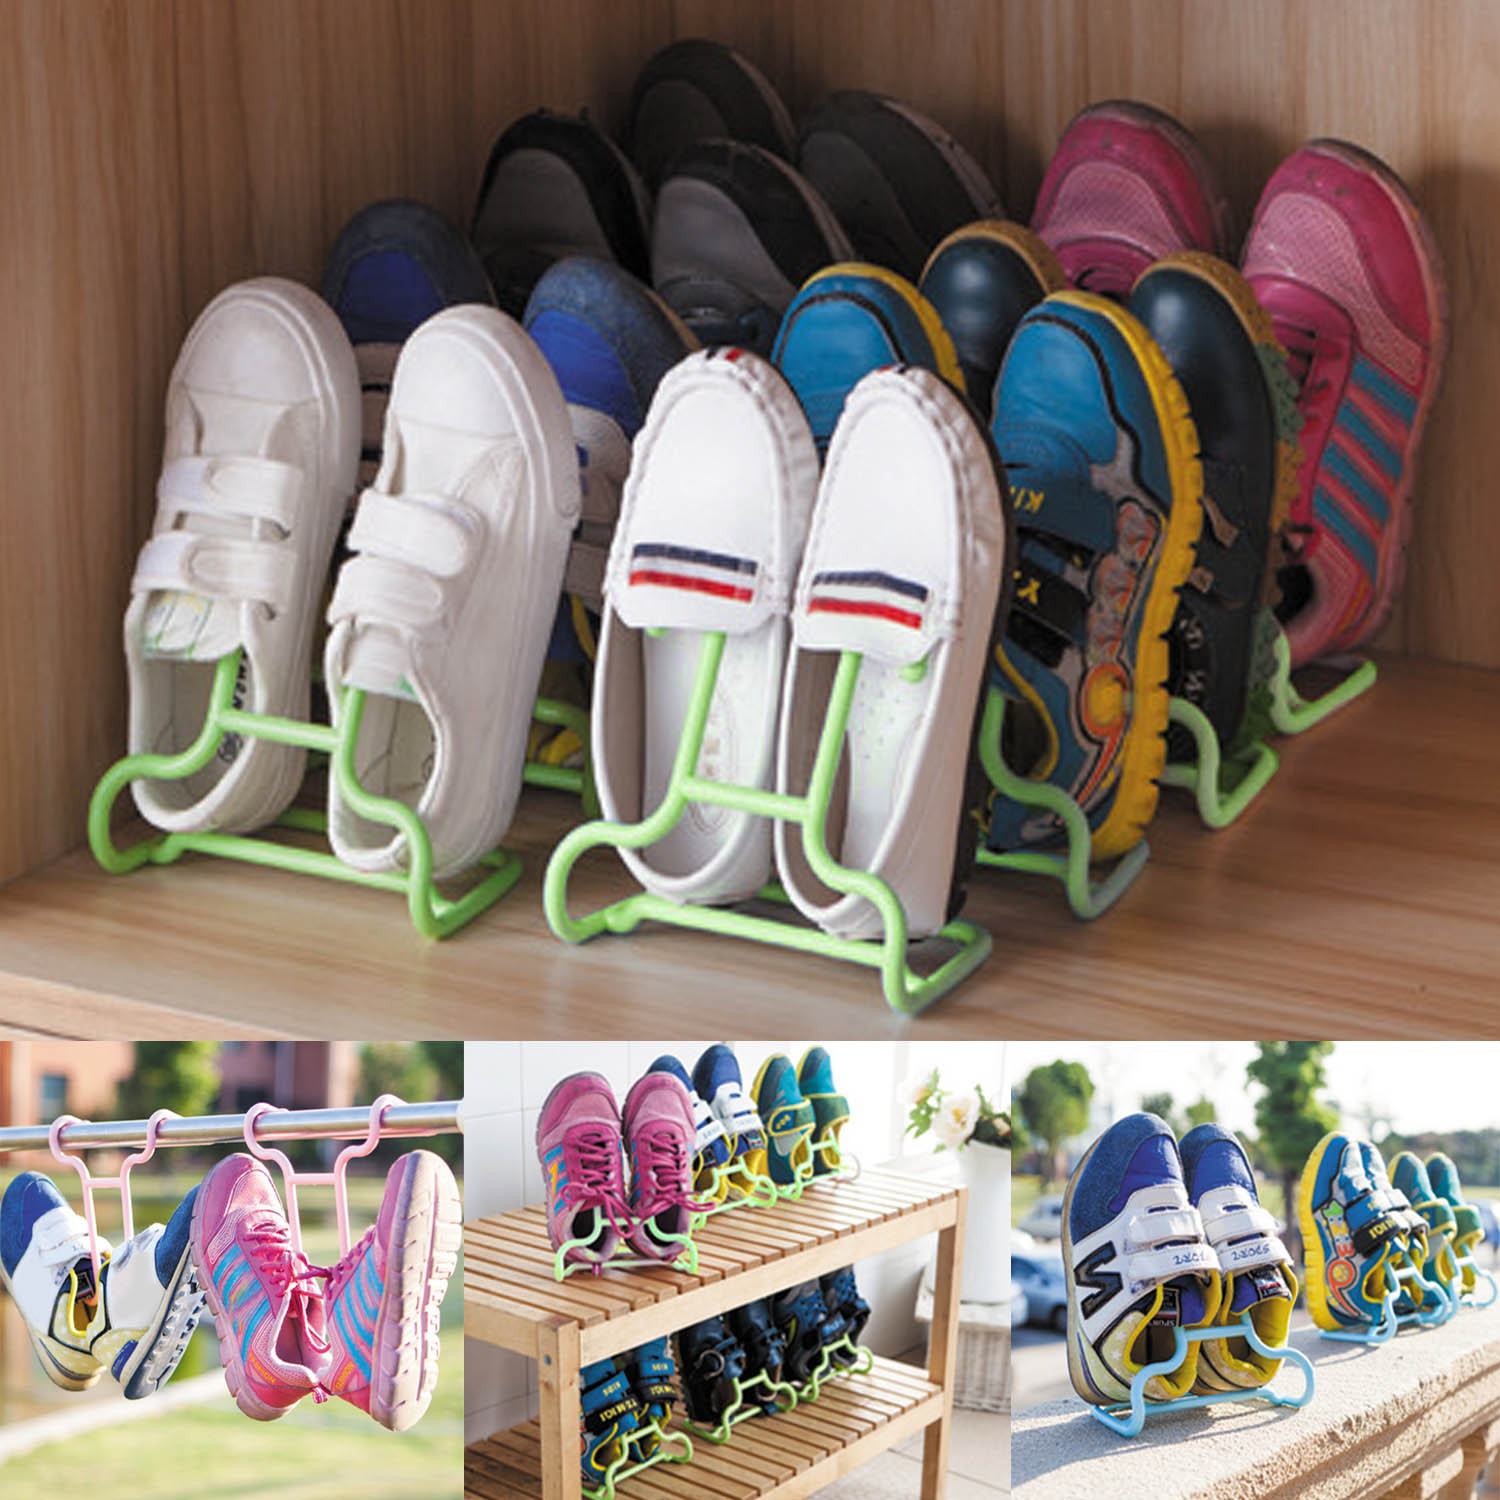 kids shoe rack